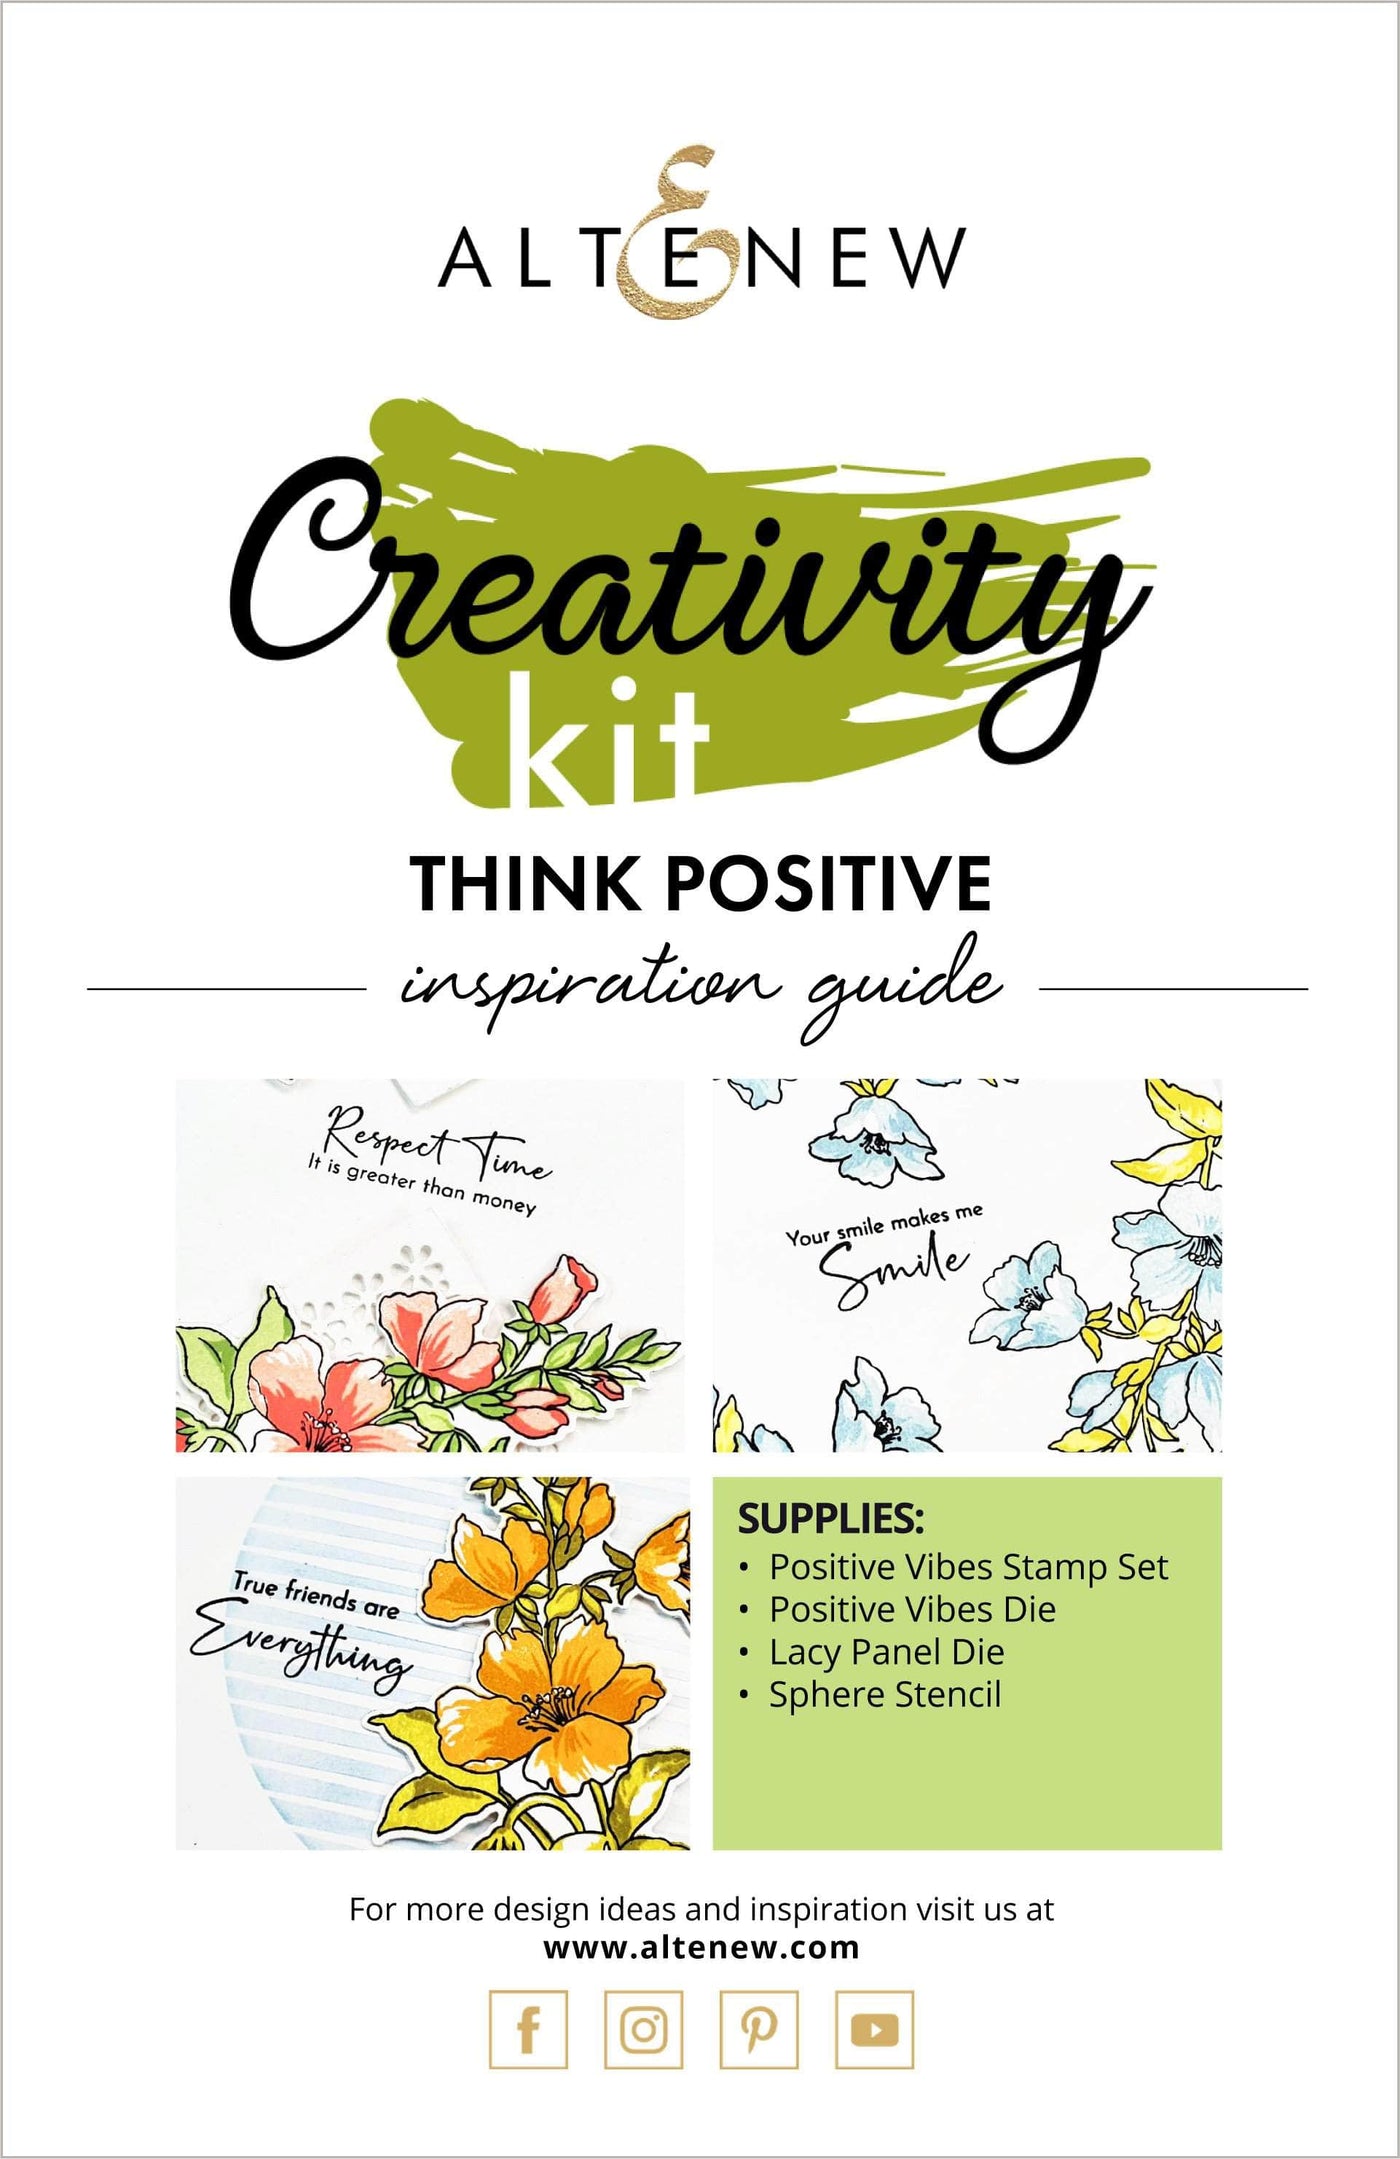 55Printing.com Printed Media Think Positive Creativity Cardmaking Kit Inspiration Guide